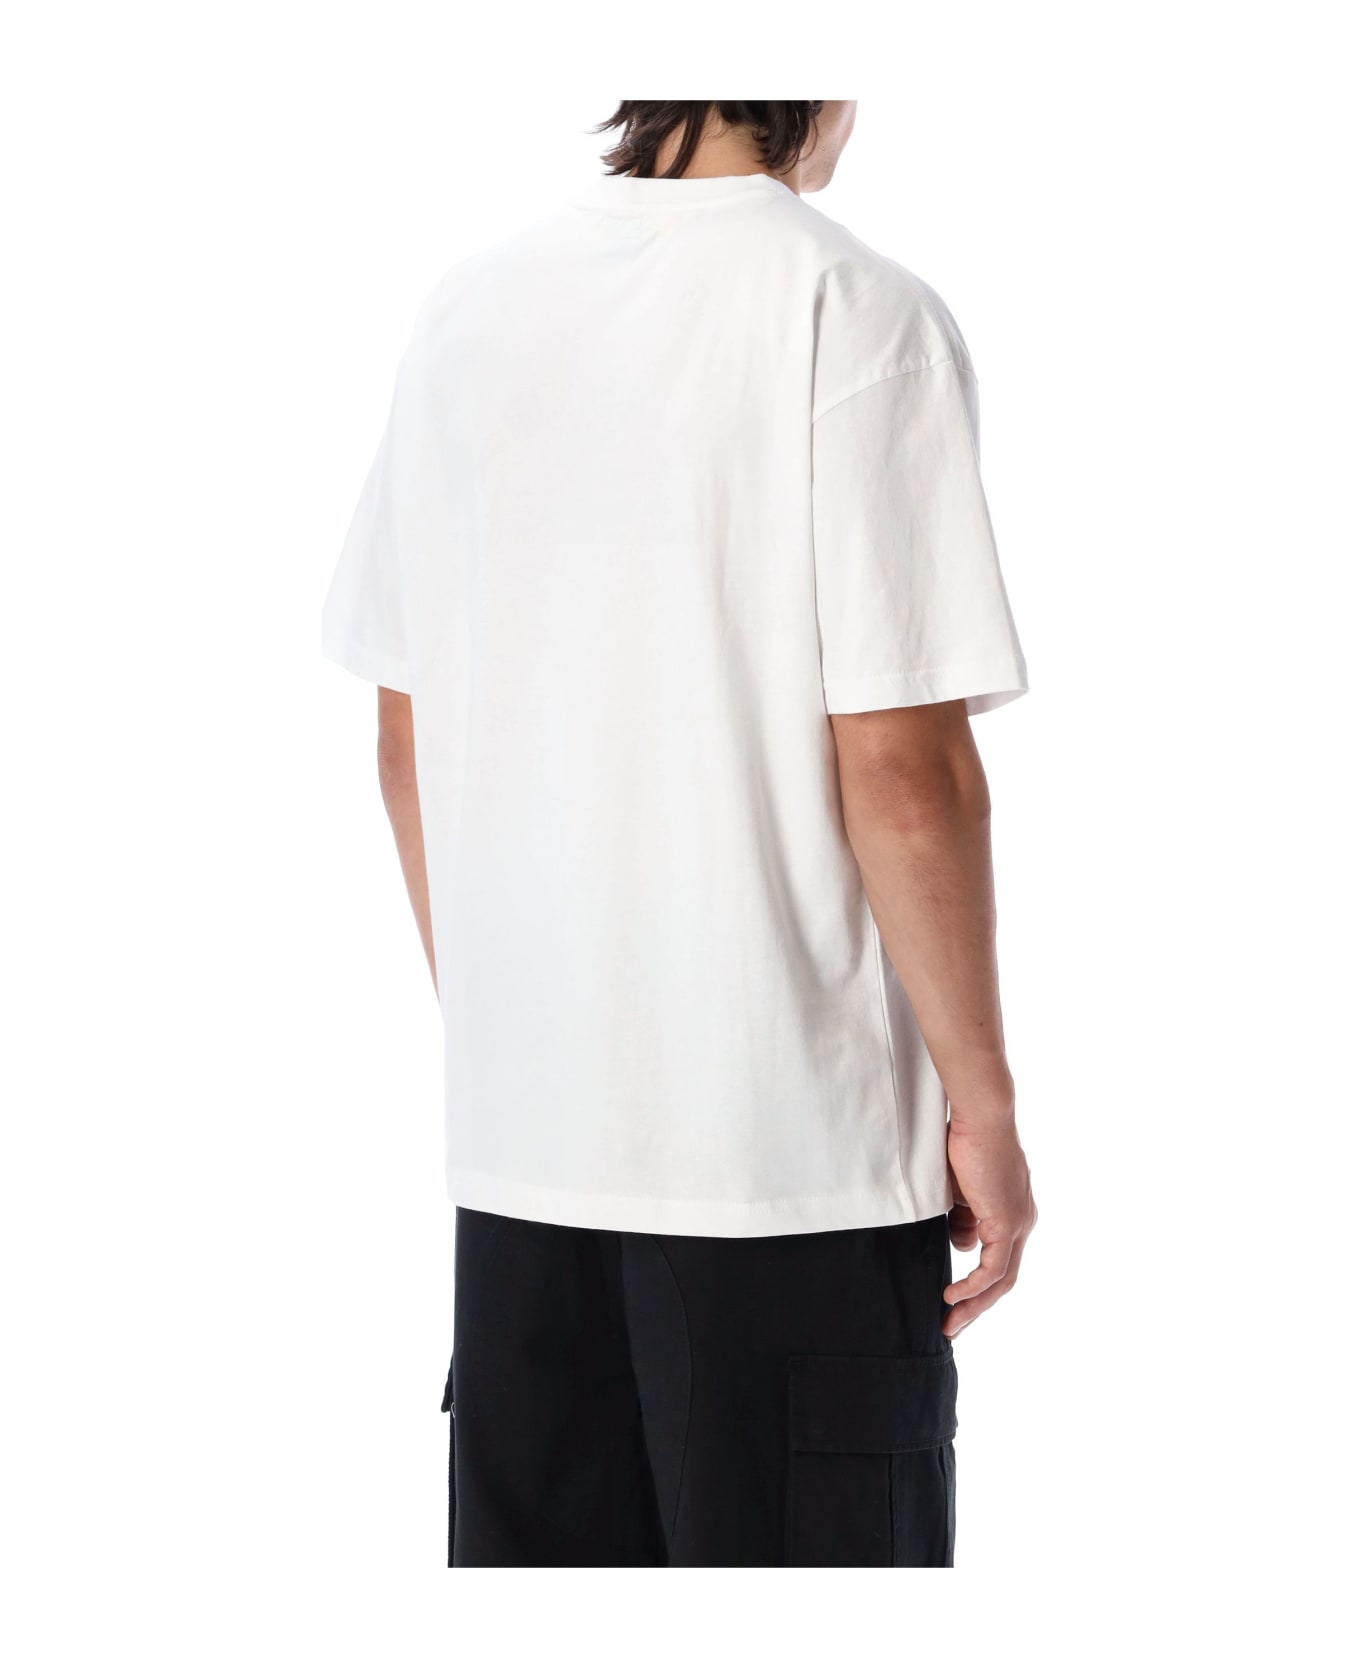 Market Iron Market T-shirt - WHITE